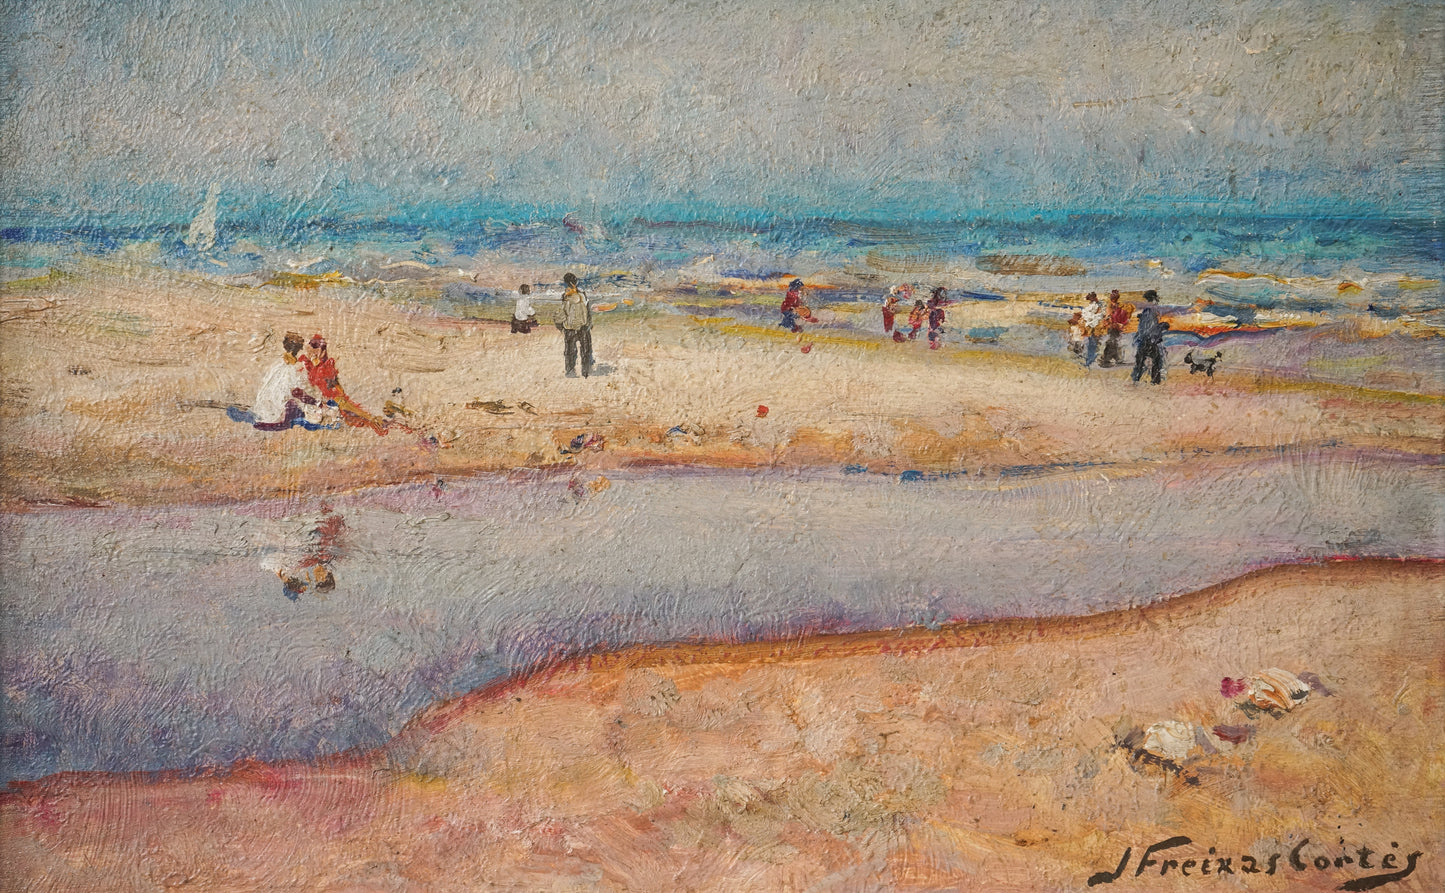 Post Impressionist framed beach scene - Jordi Freixas Cortes